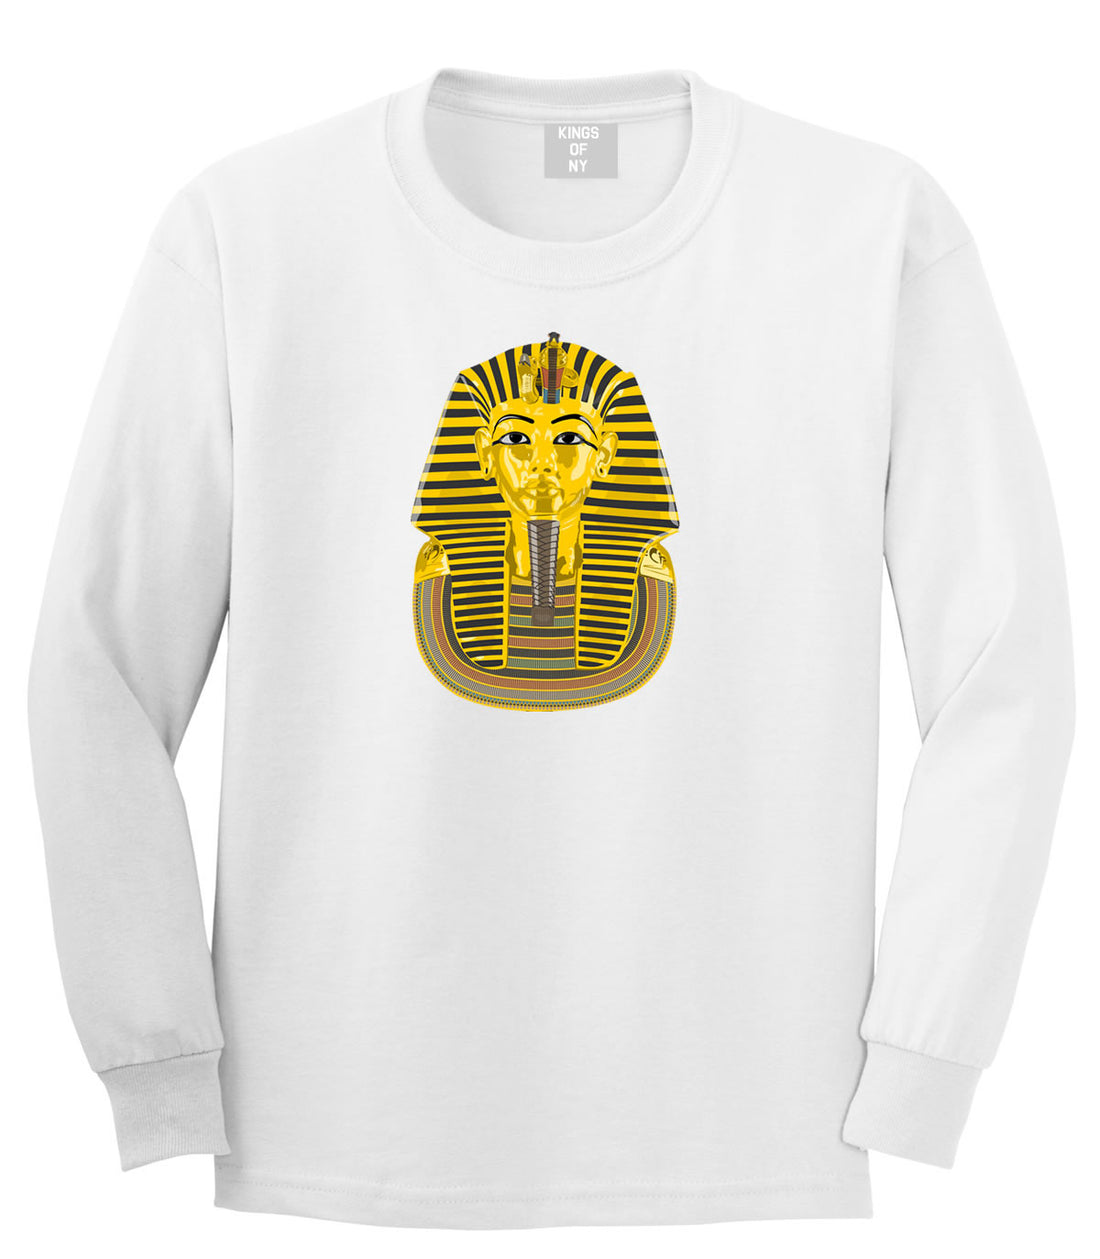 Pharaoh Egypt Gold Egyptian Head  Long Sleeve Boys Kids T-Shirt in White by Kings Of NY